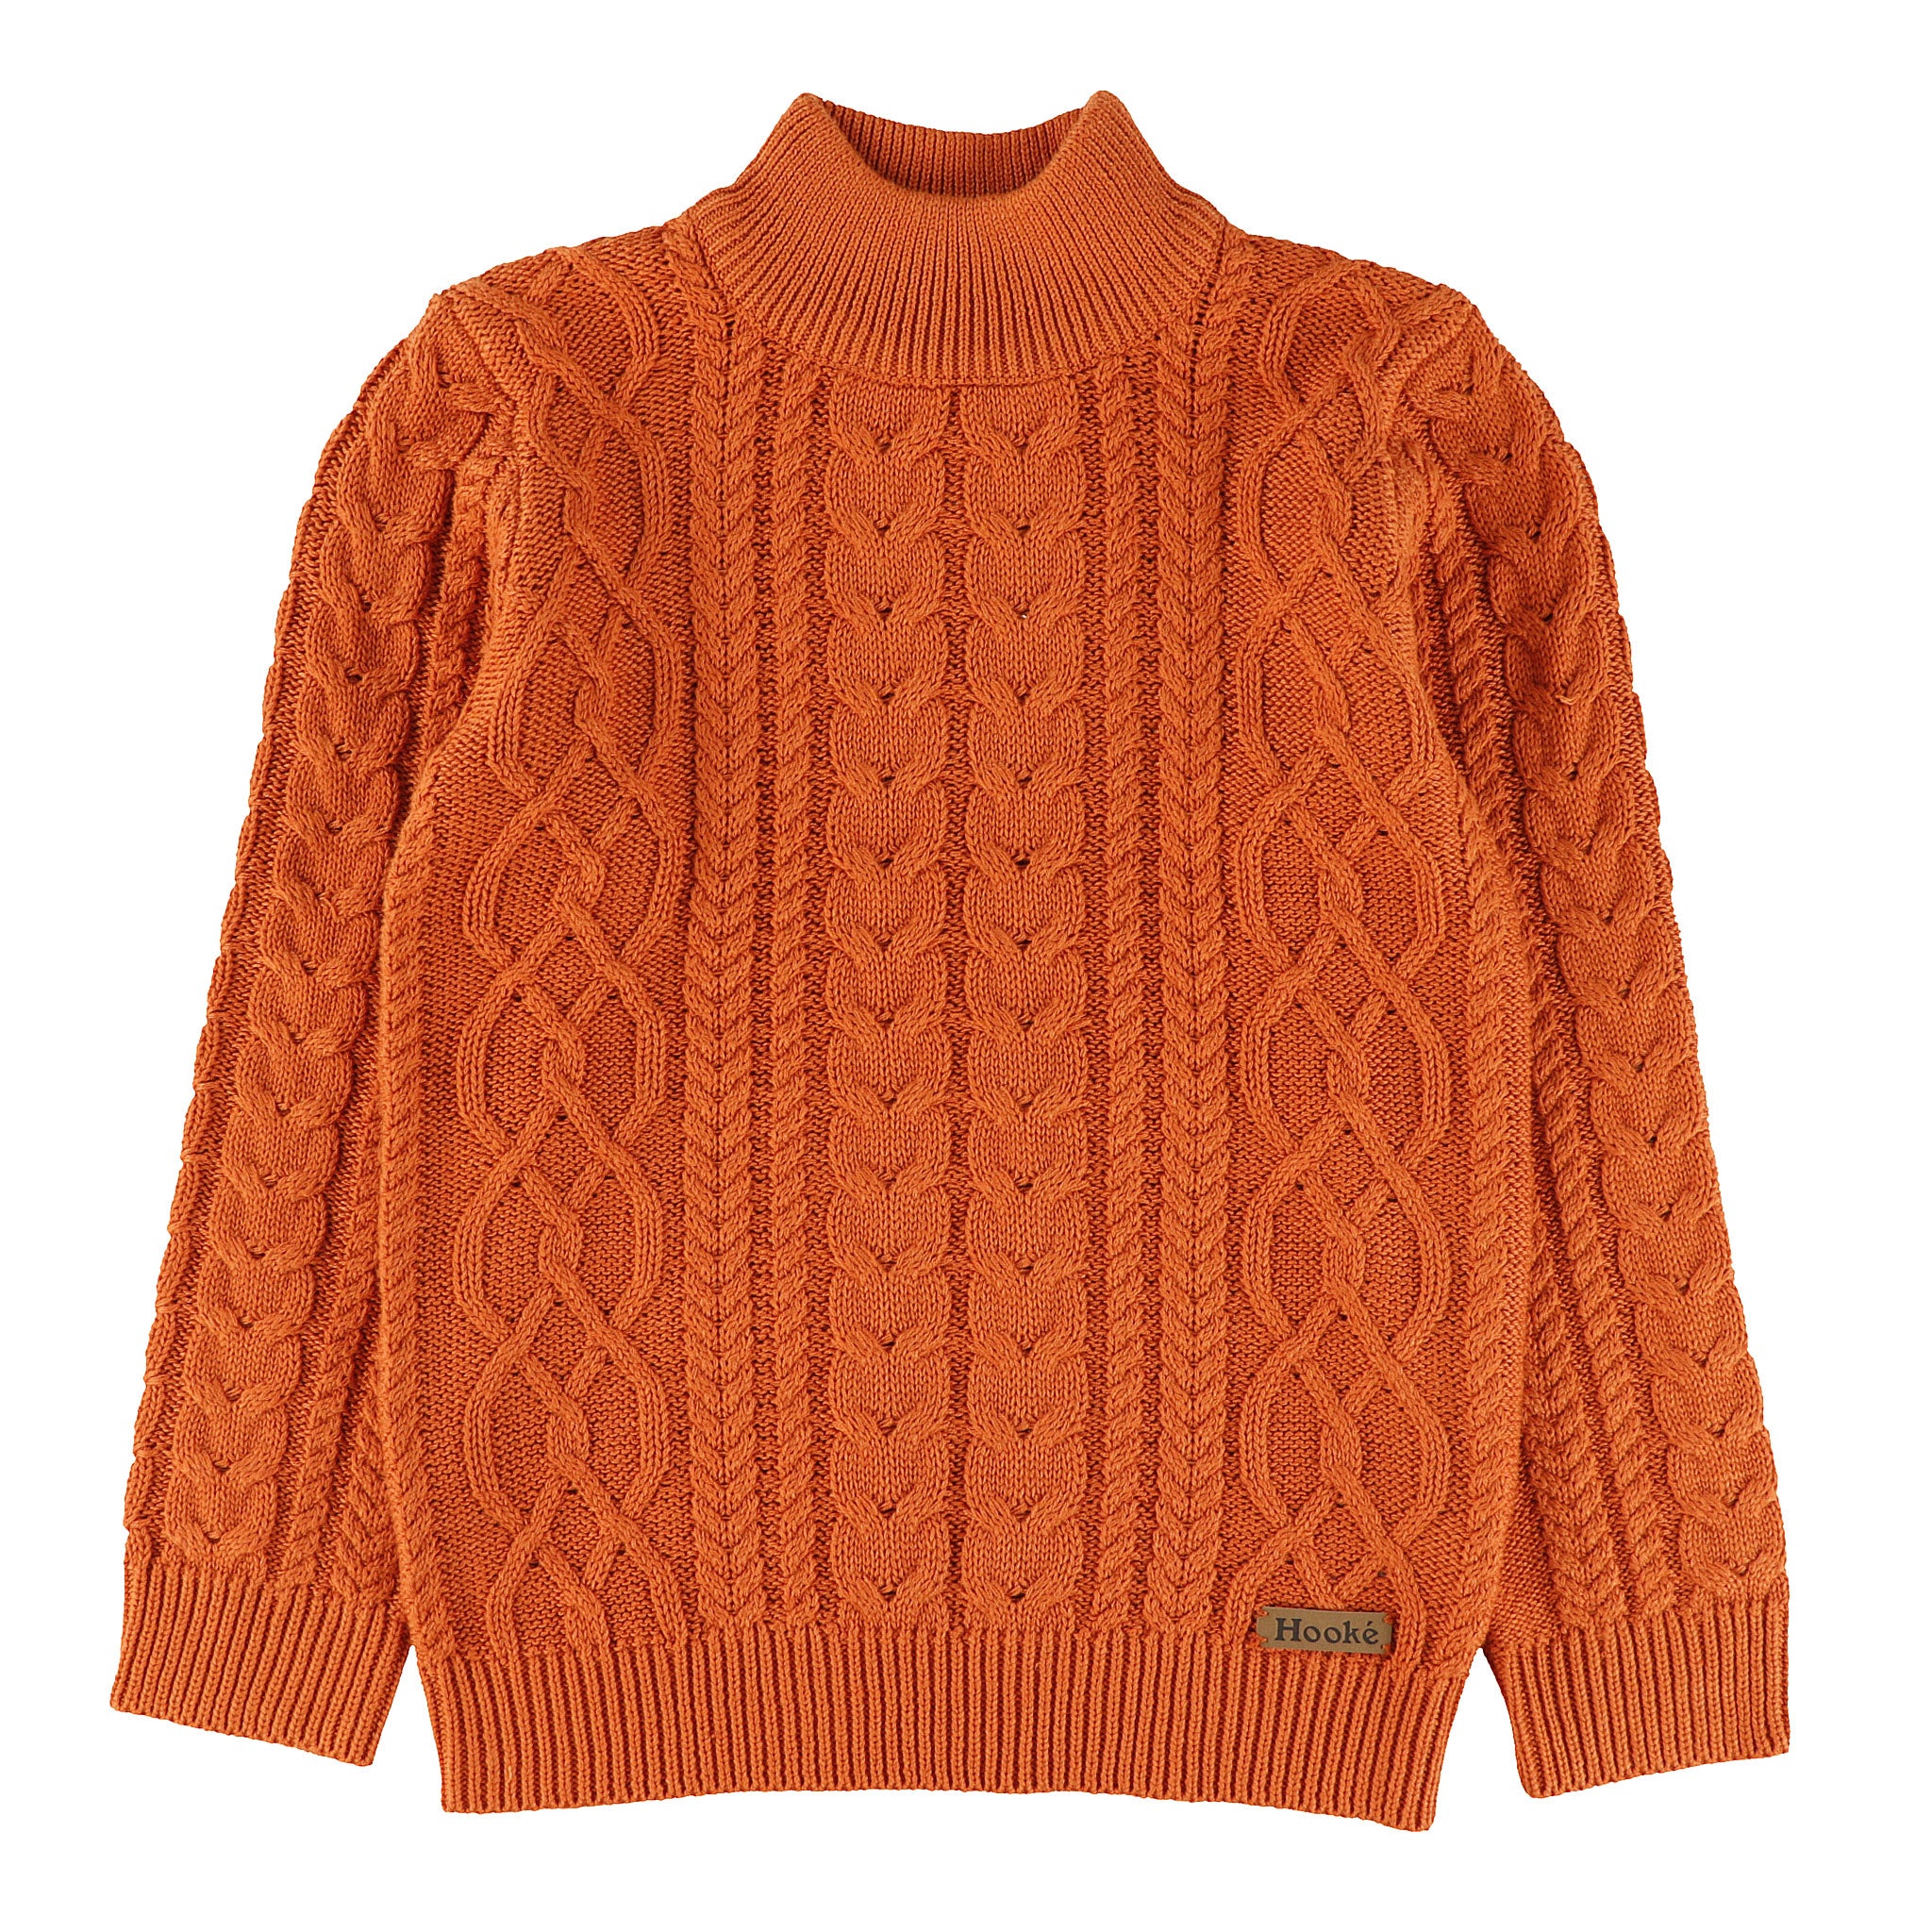 K's Fisherman Sweater - Hooké